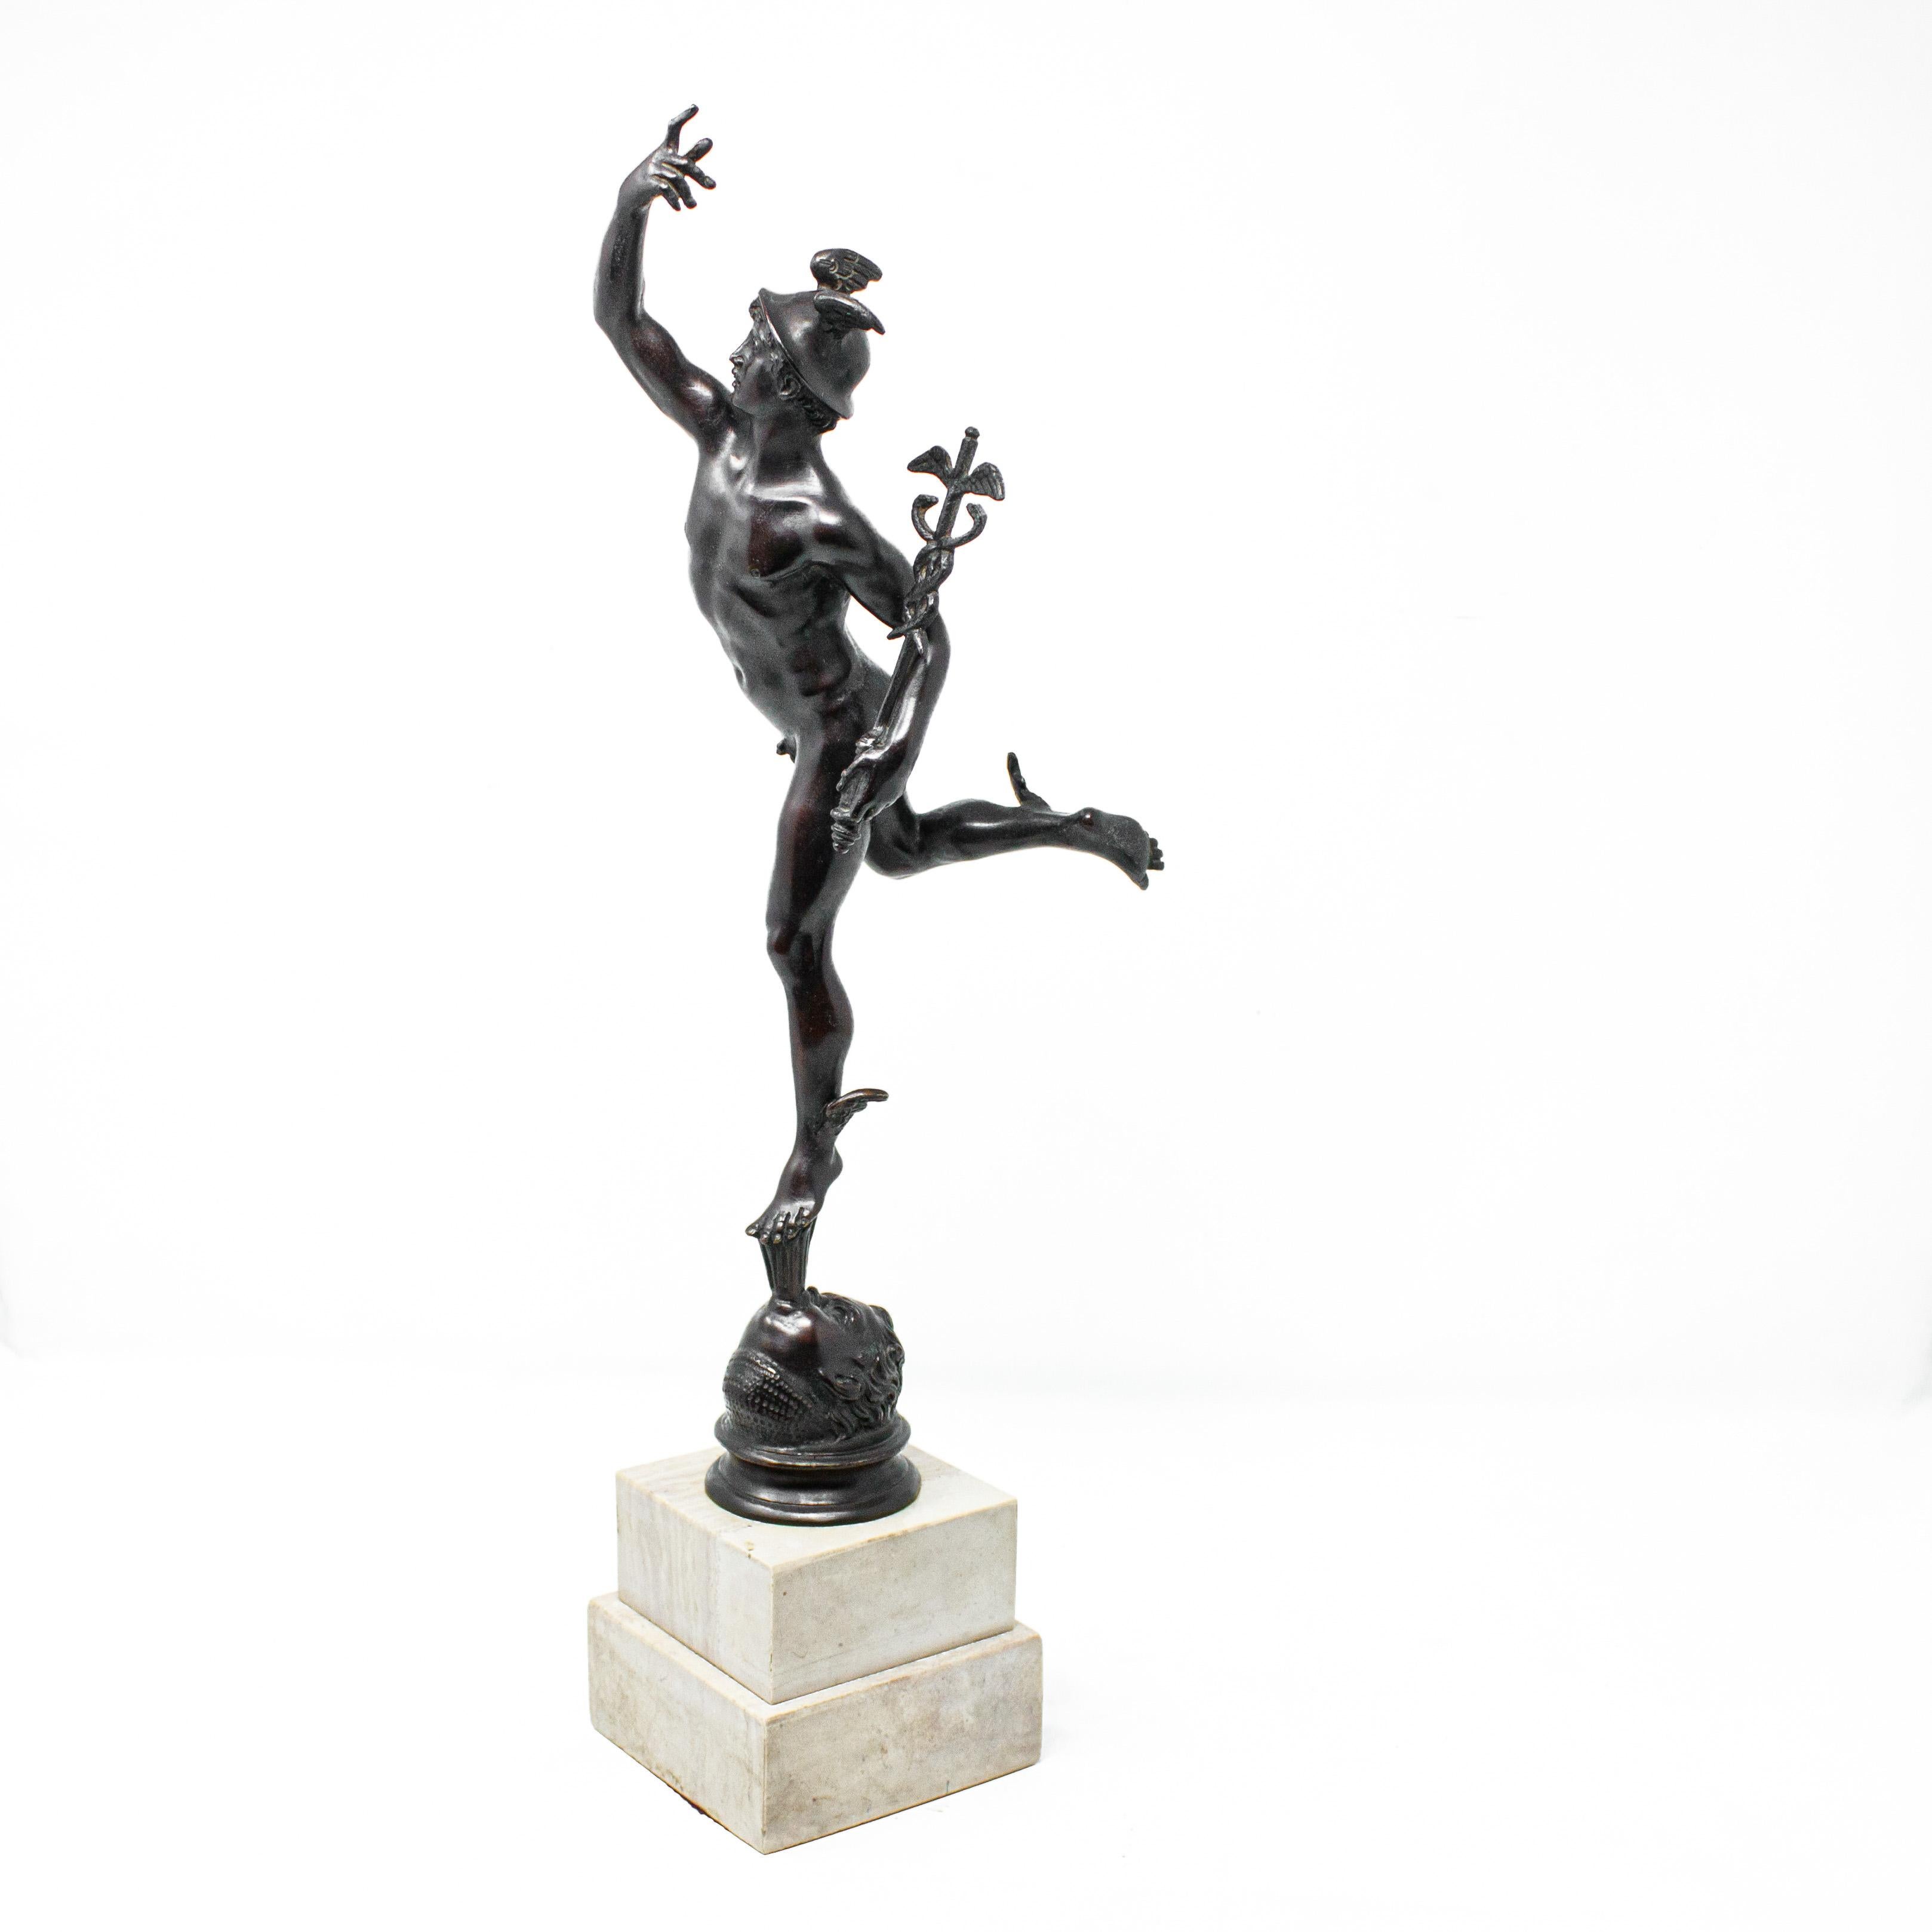 Molded 19th Century, Flying Mercury Sculpture in Bronze